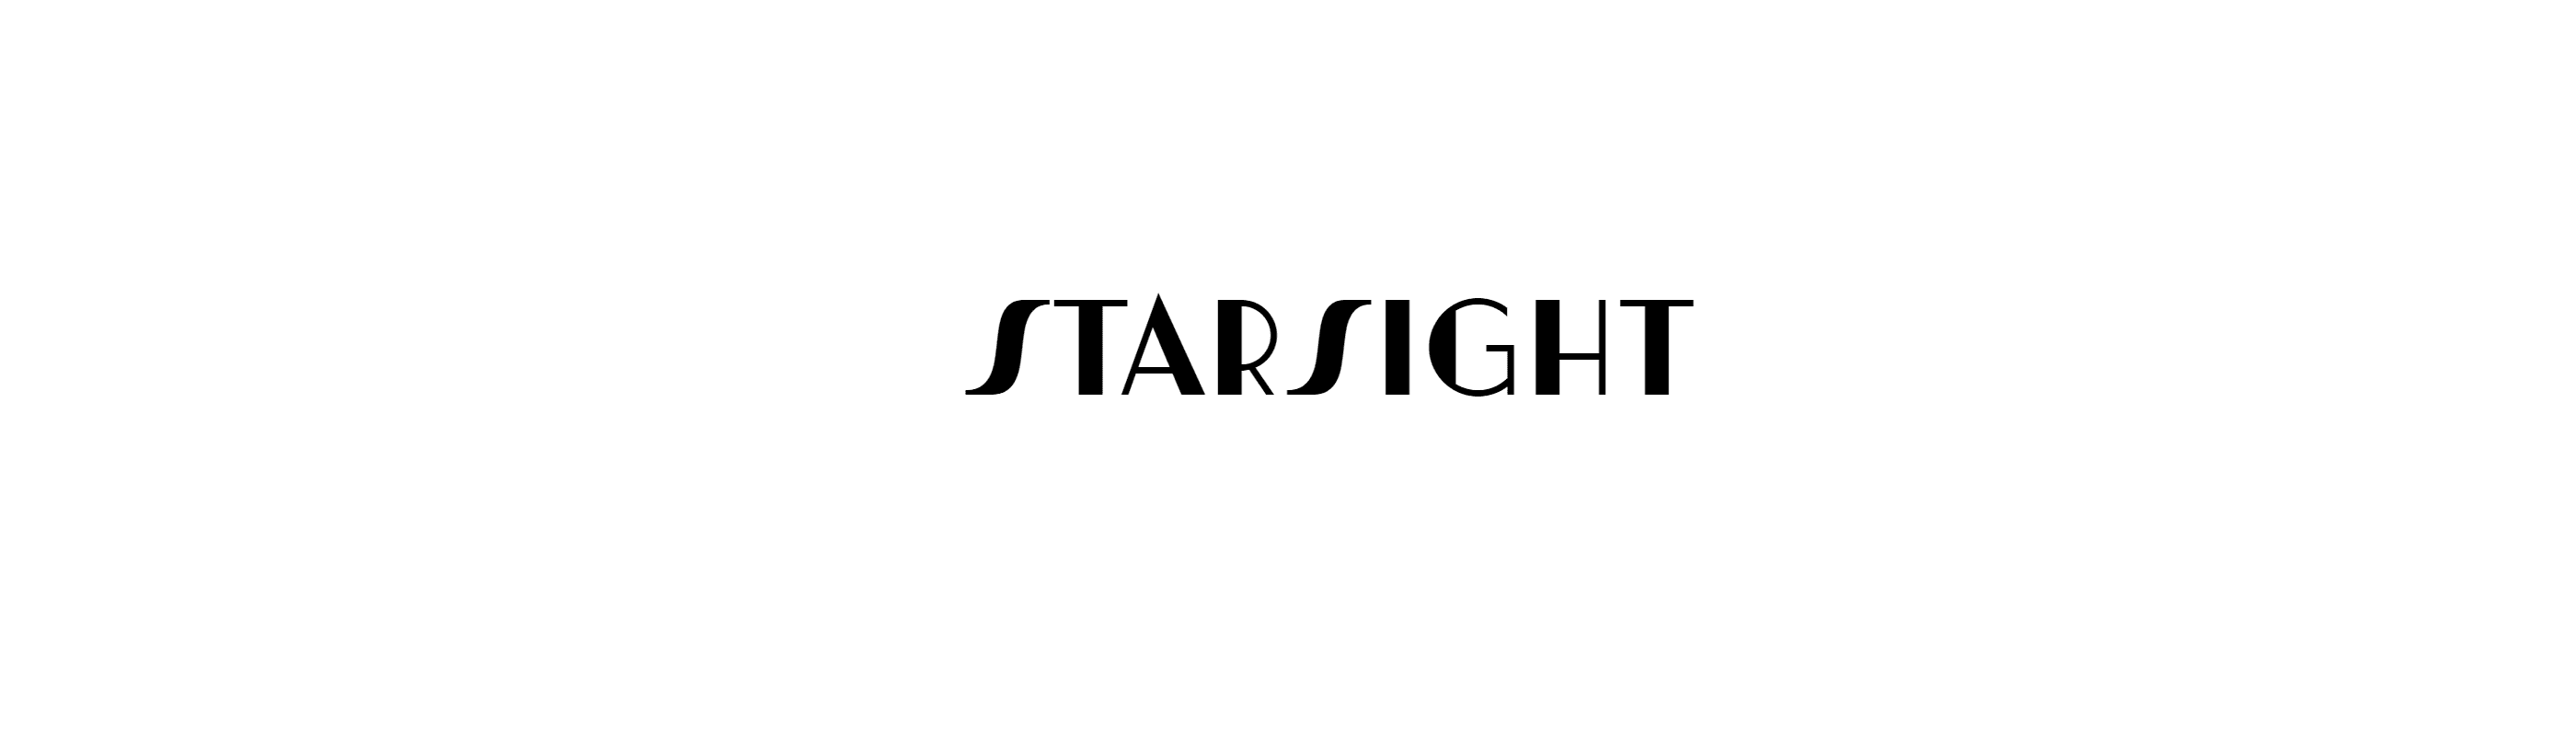 starsight 橫幅